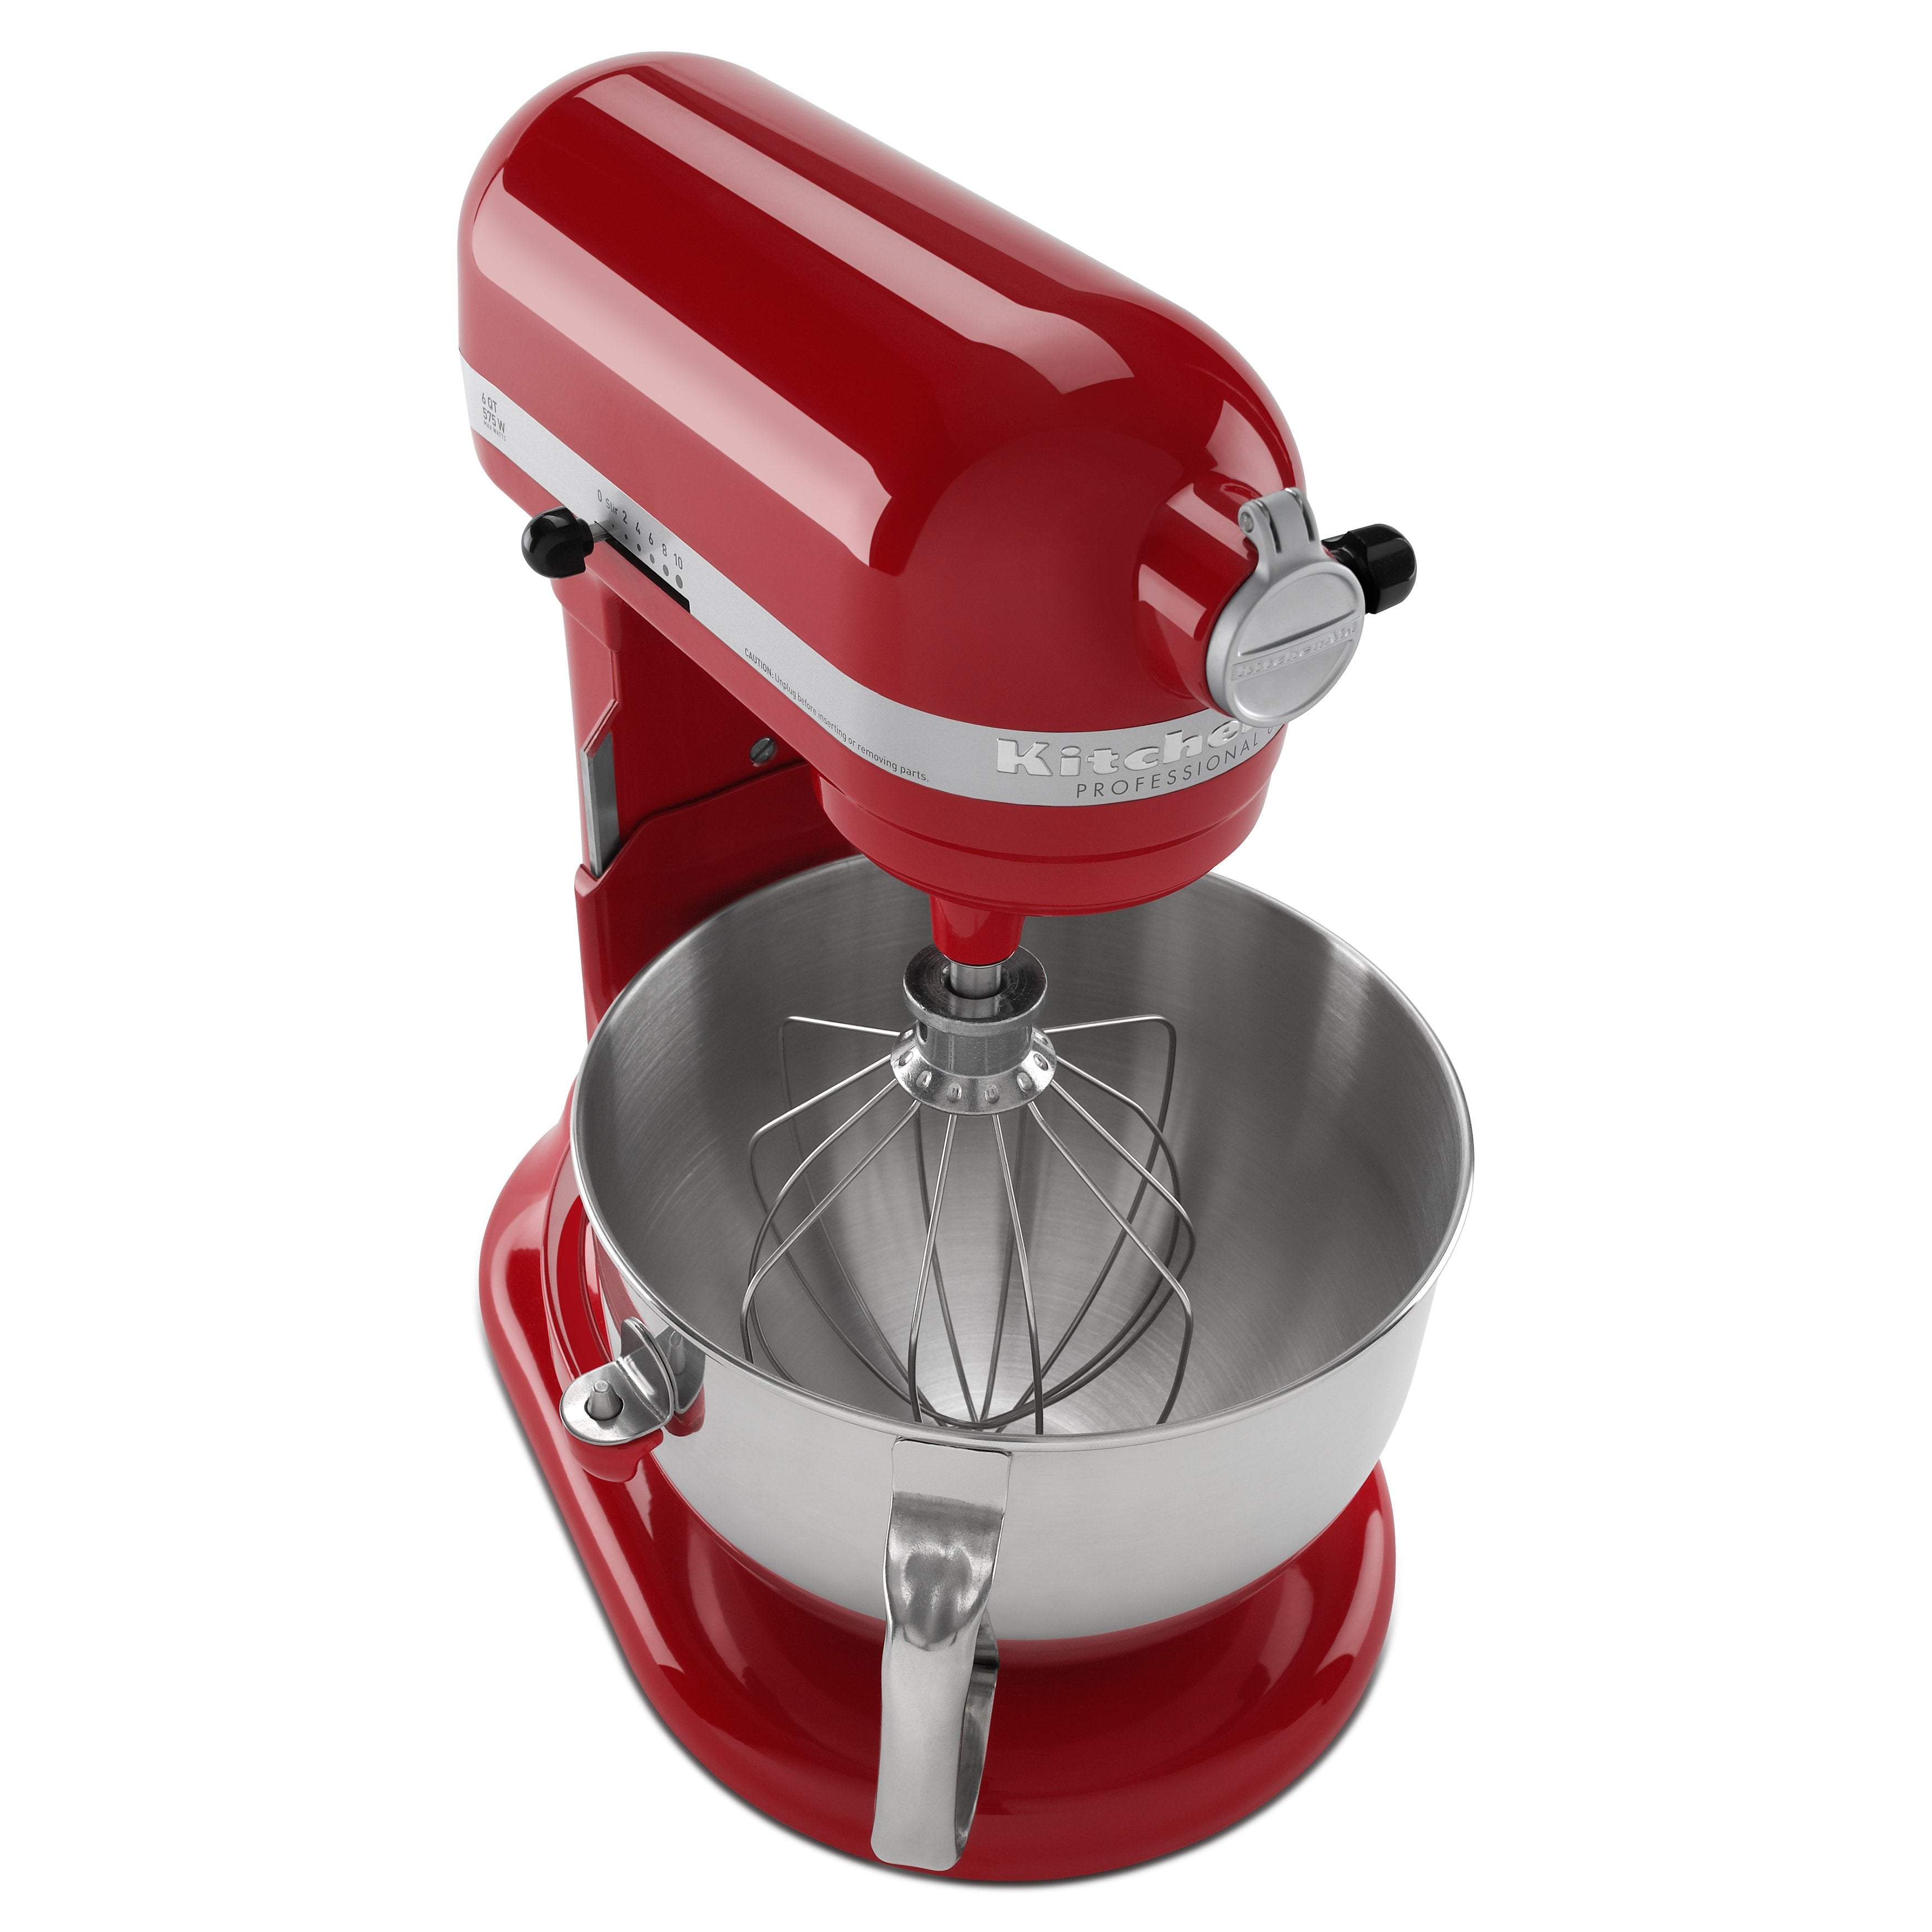 KitchenAid Professional 600 KP26M1X Bowl-Lift Stand Mixer - Empire Red